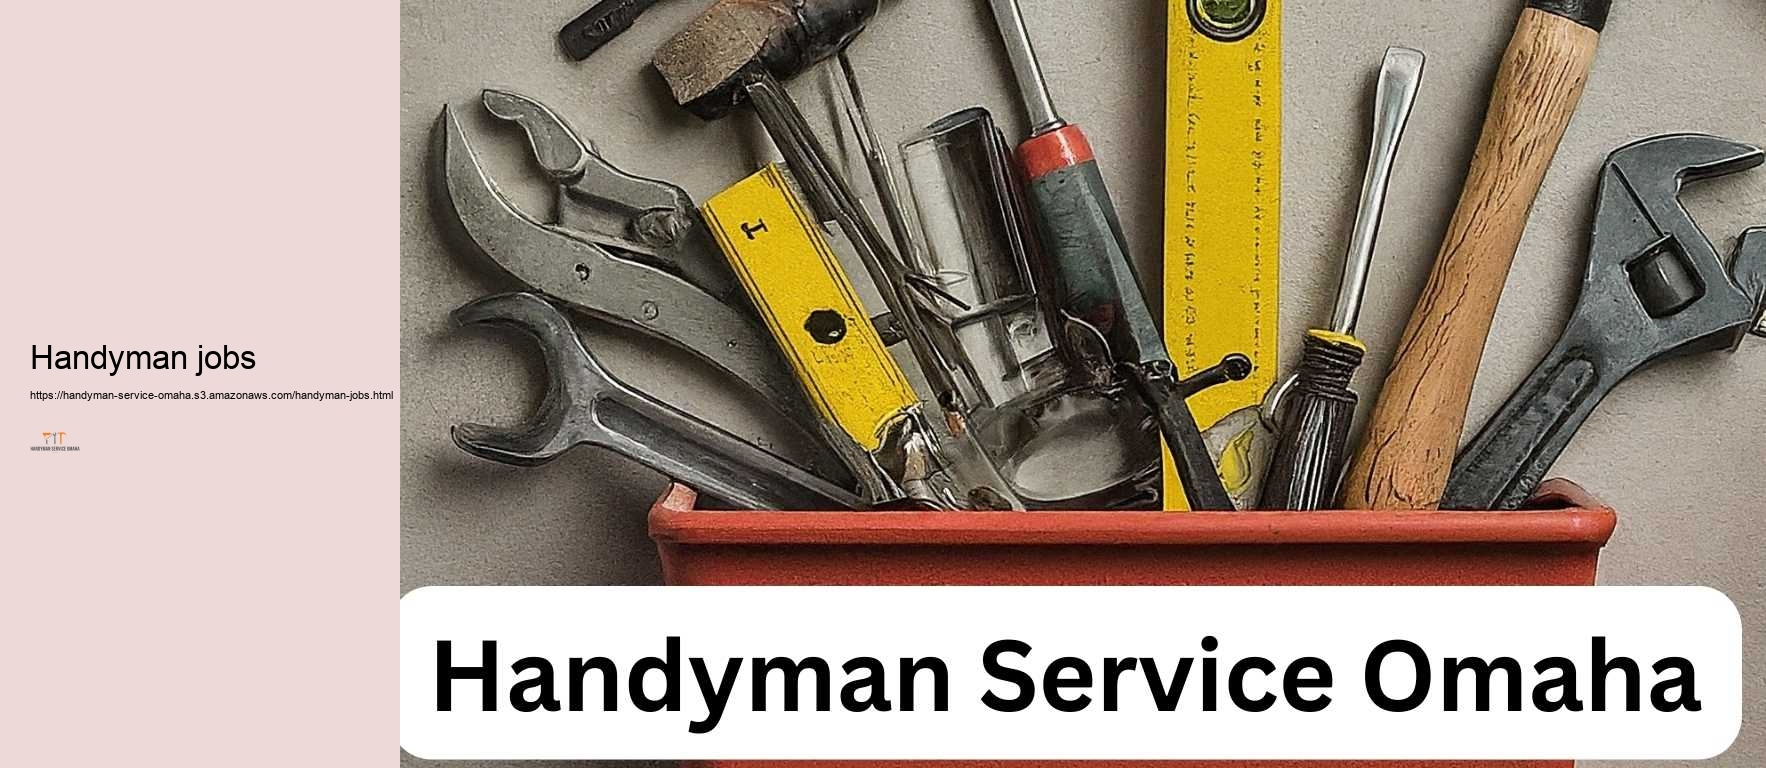 Handyman jobs